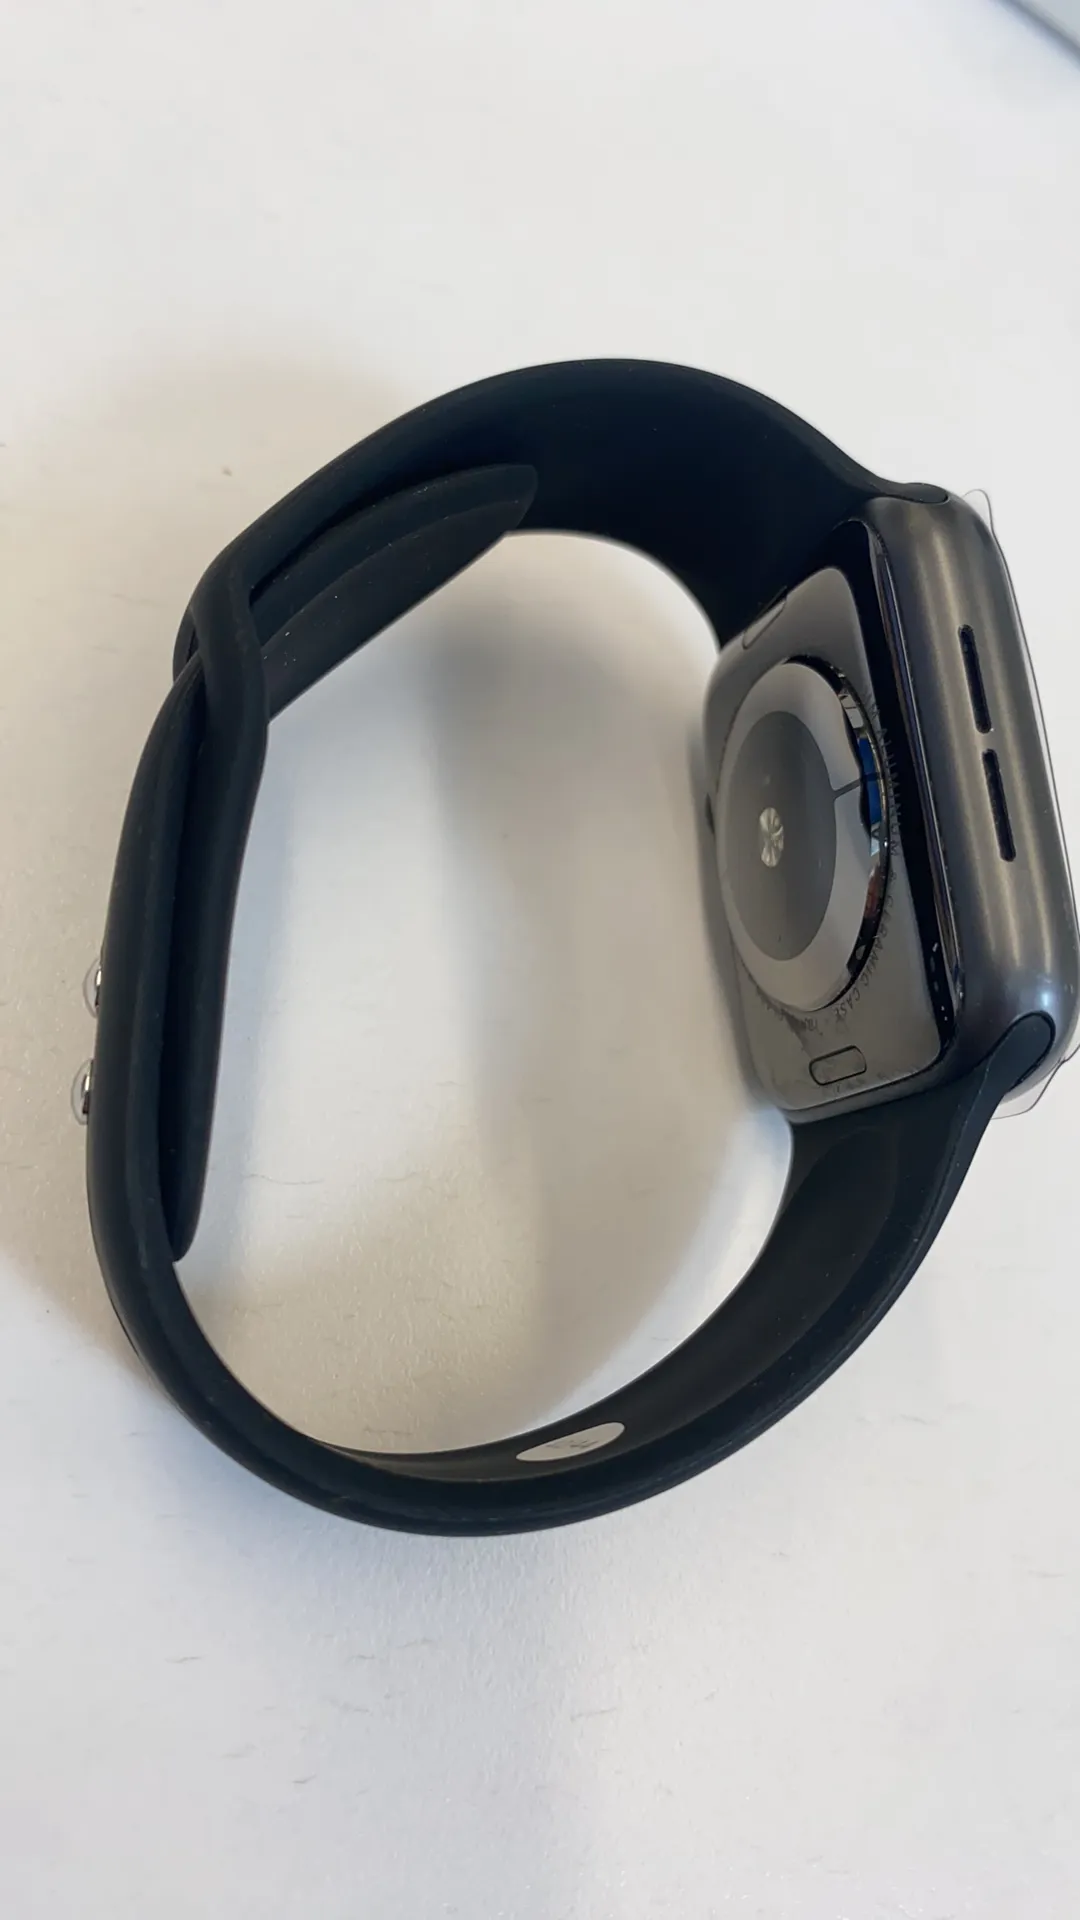 Apple Watch Series 5 - 44mm - Aluminum Space Gray media